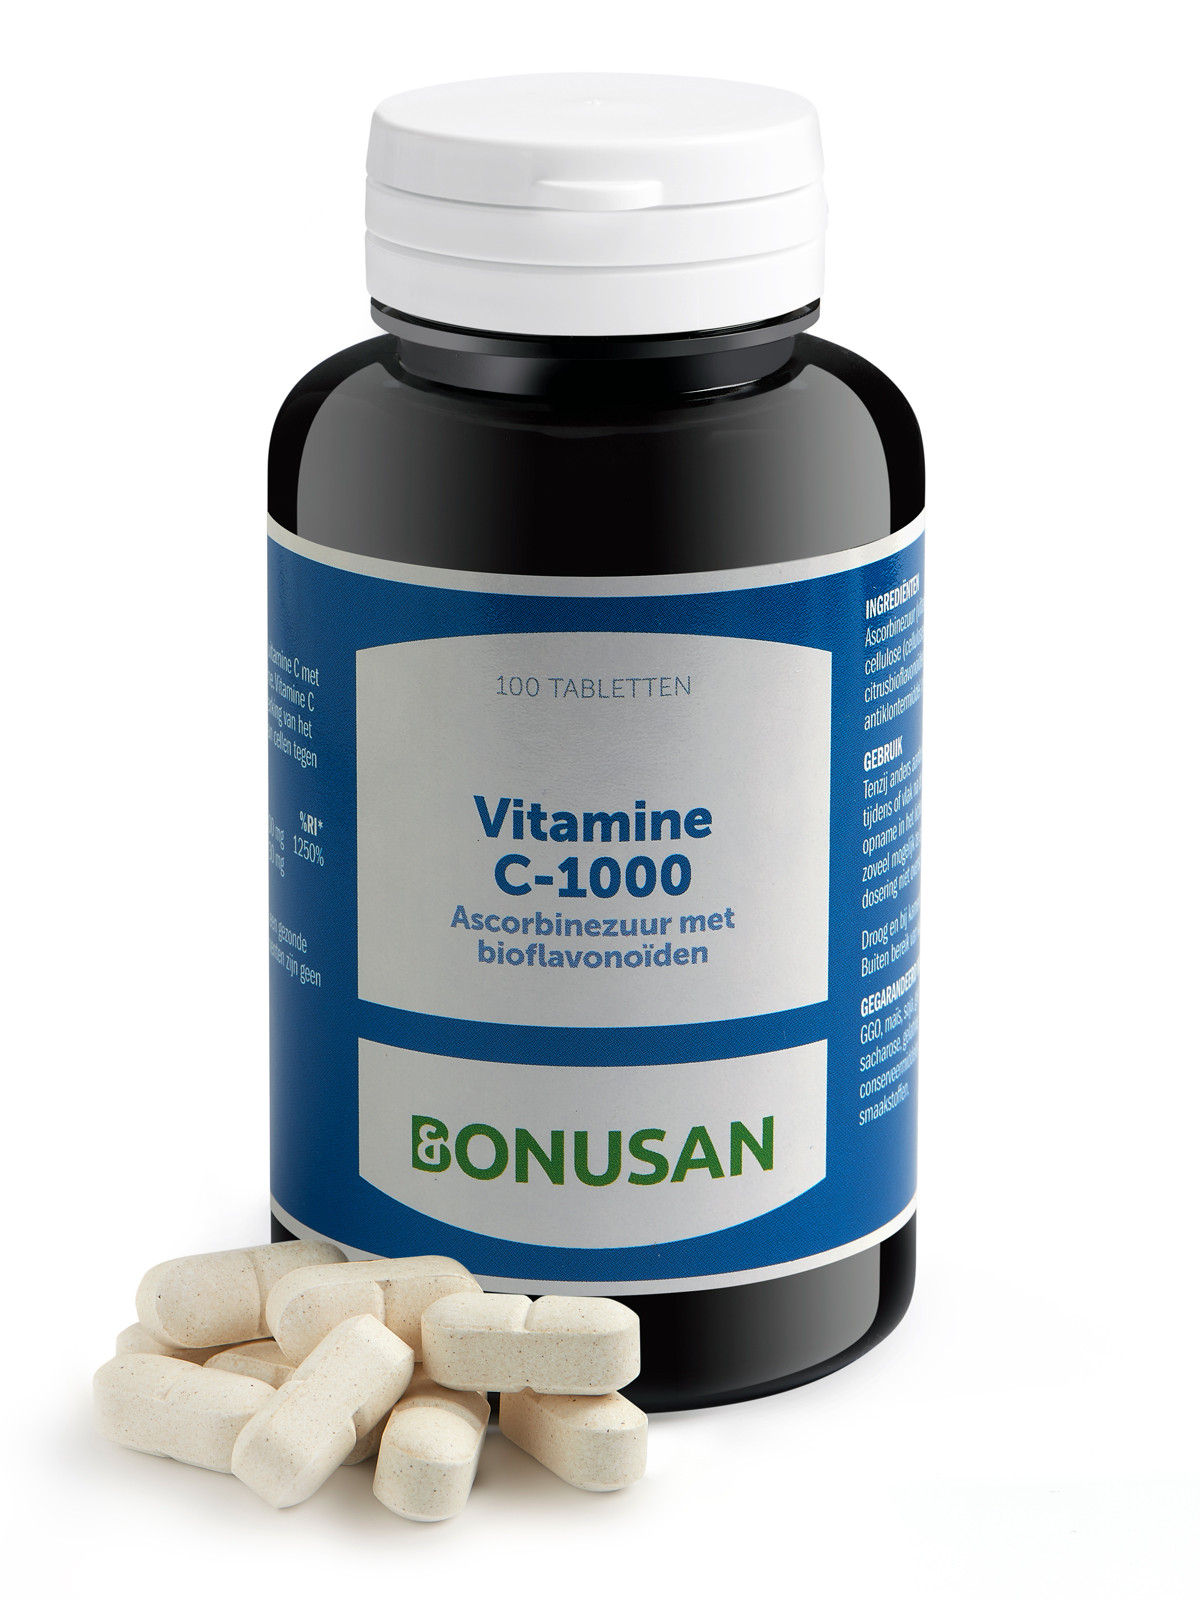 Bonusan - Vitamine C1000 ascorbinezuur